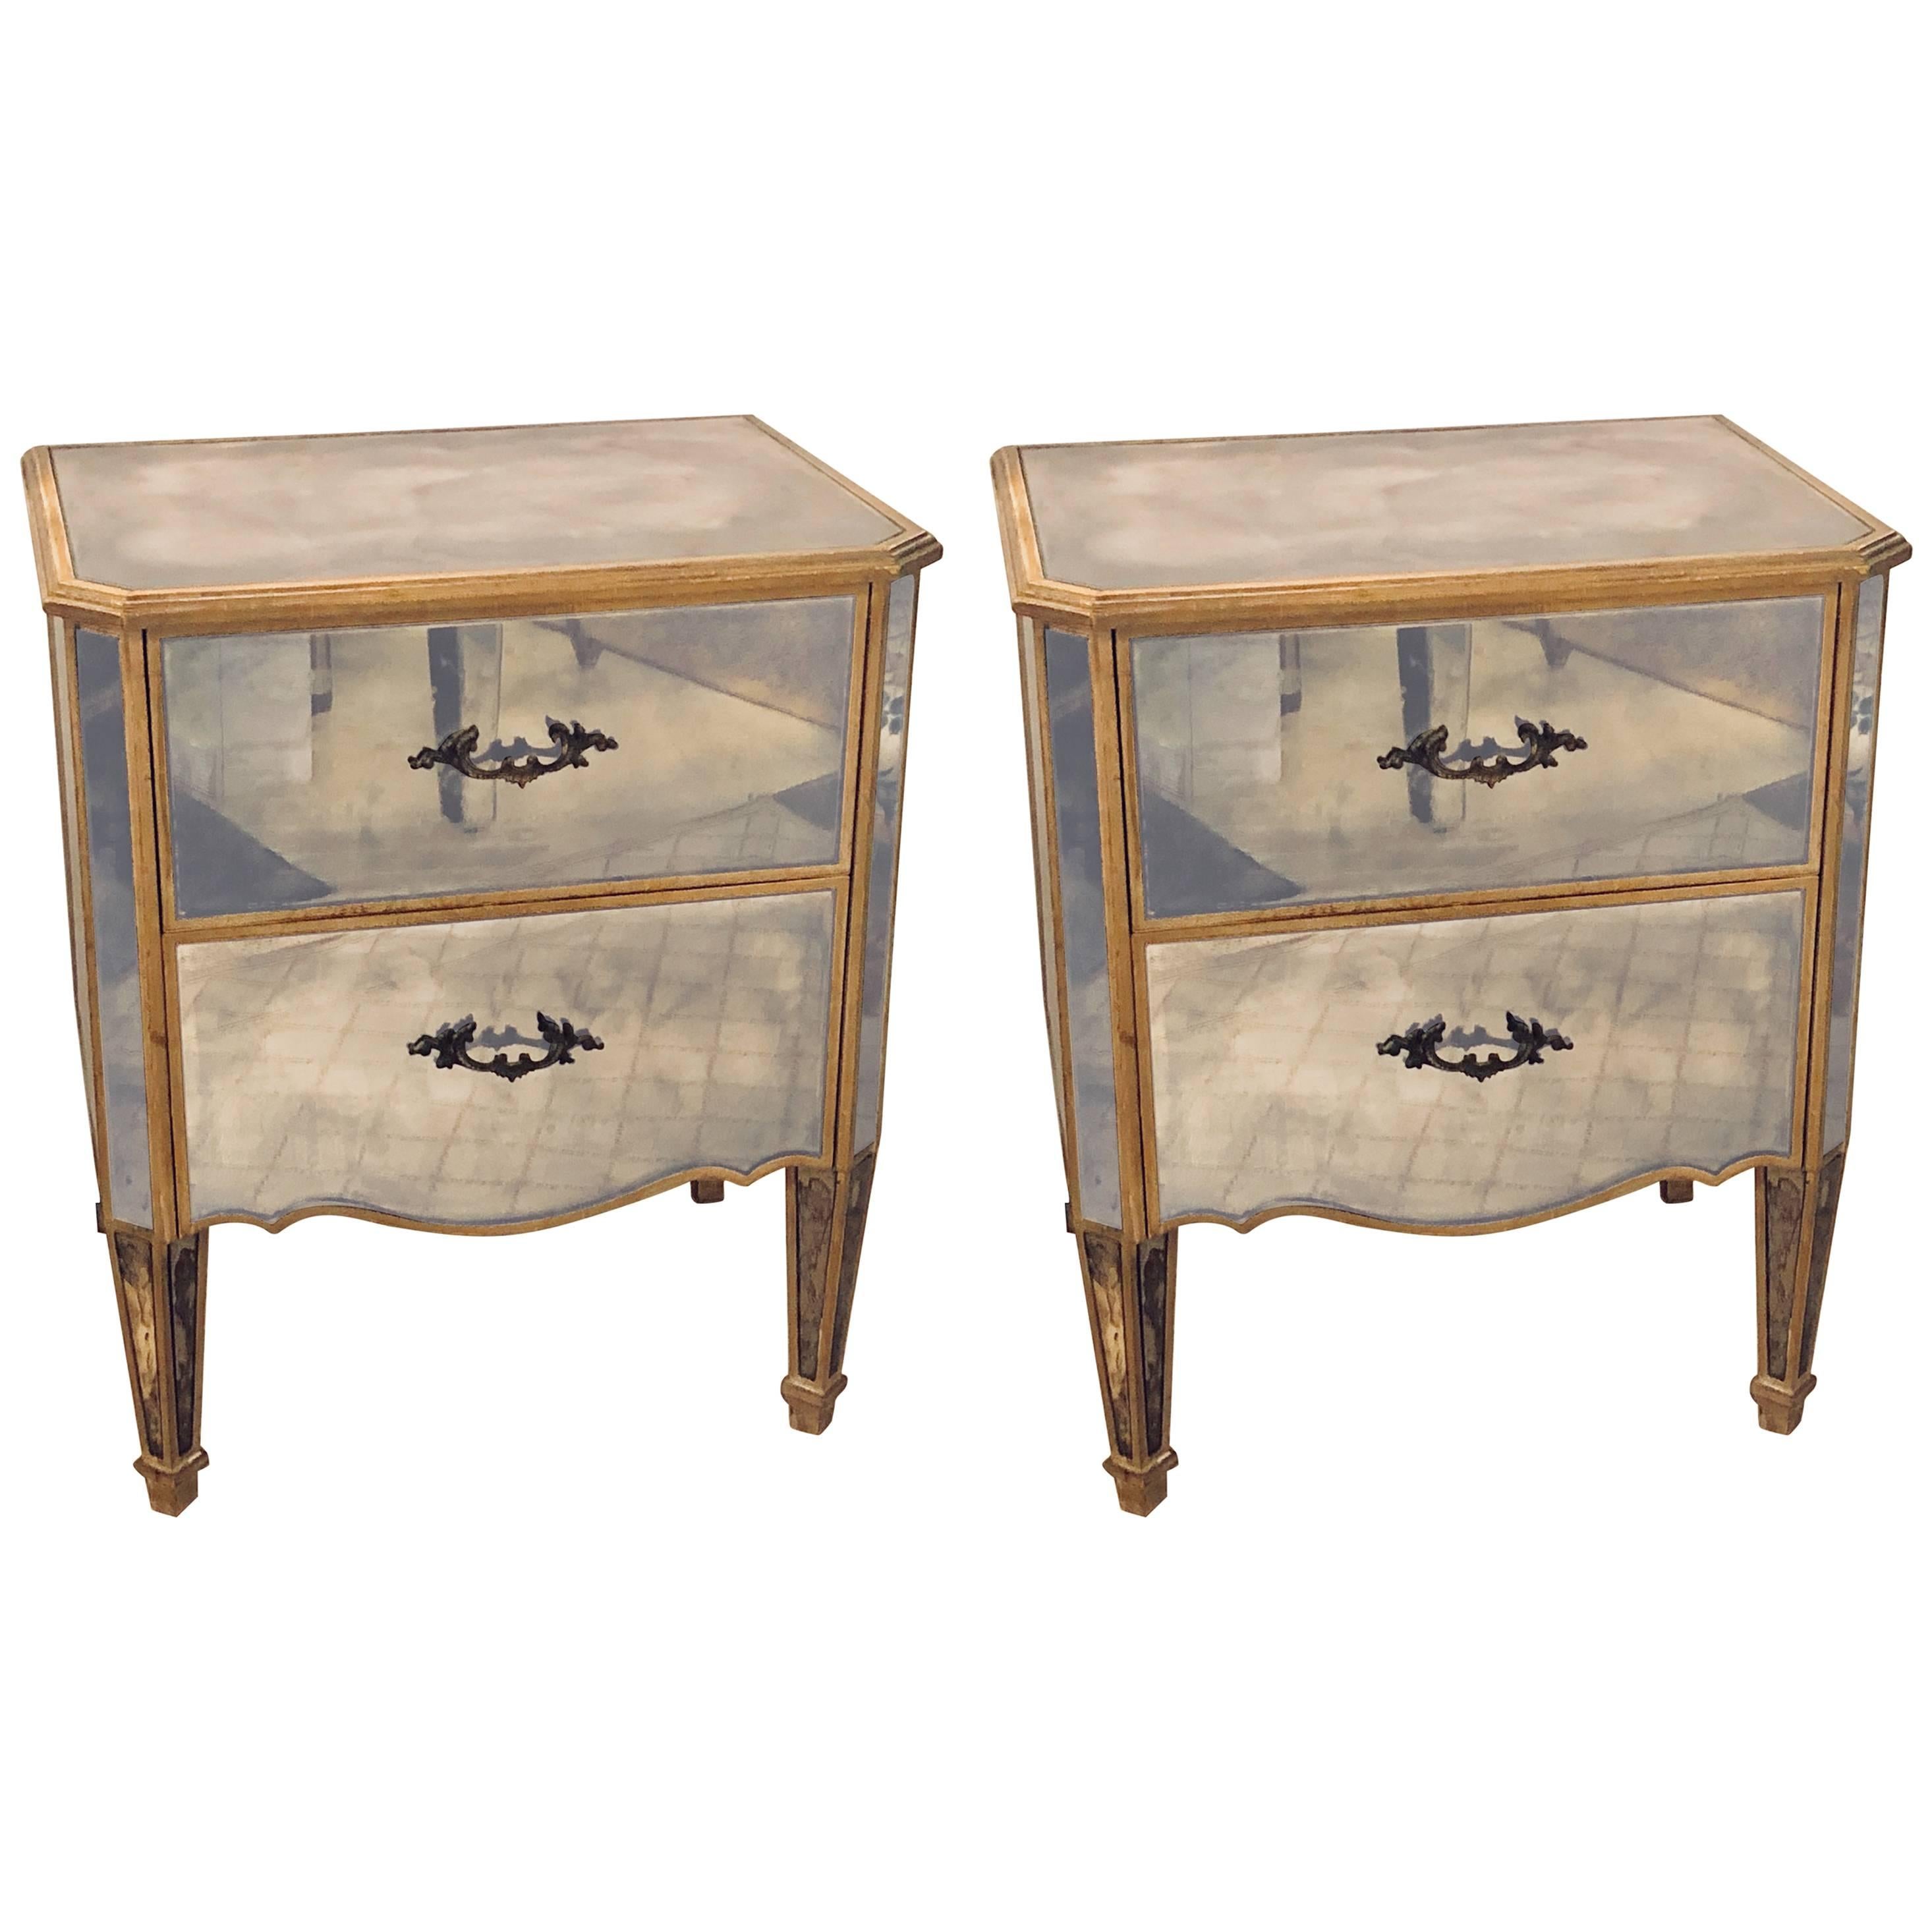 Pair of Hollywood Regency Style Vintage Mirrored End Tables or Nightstands